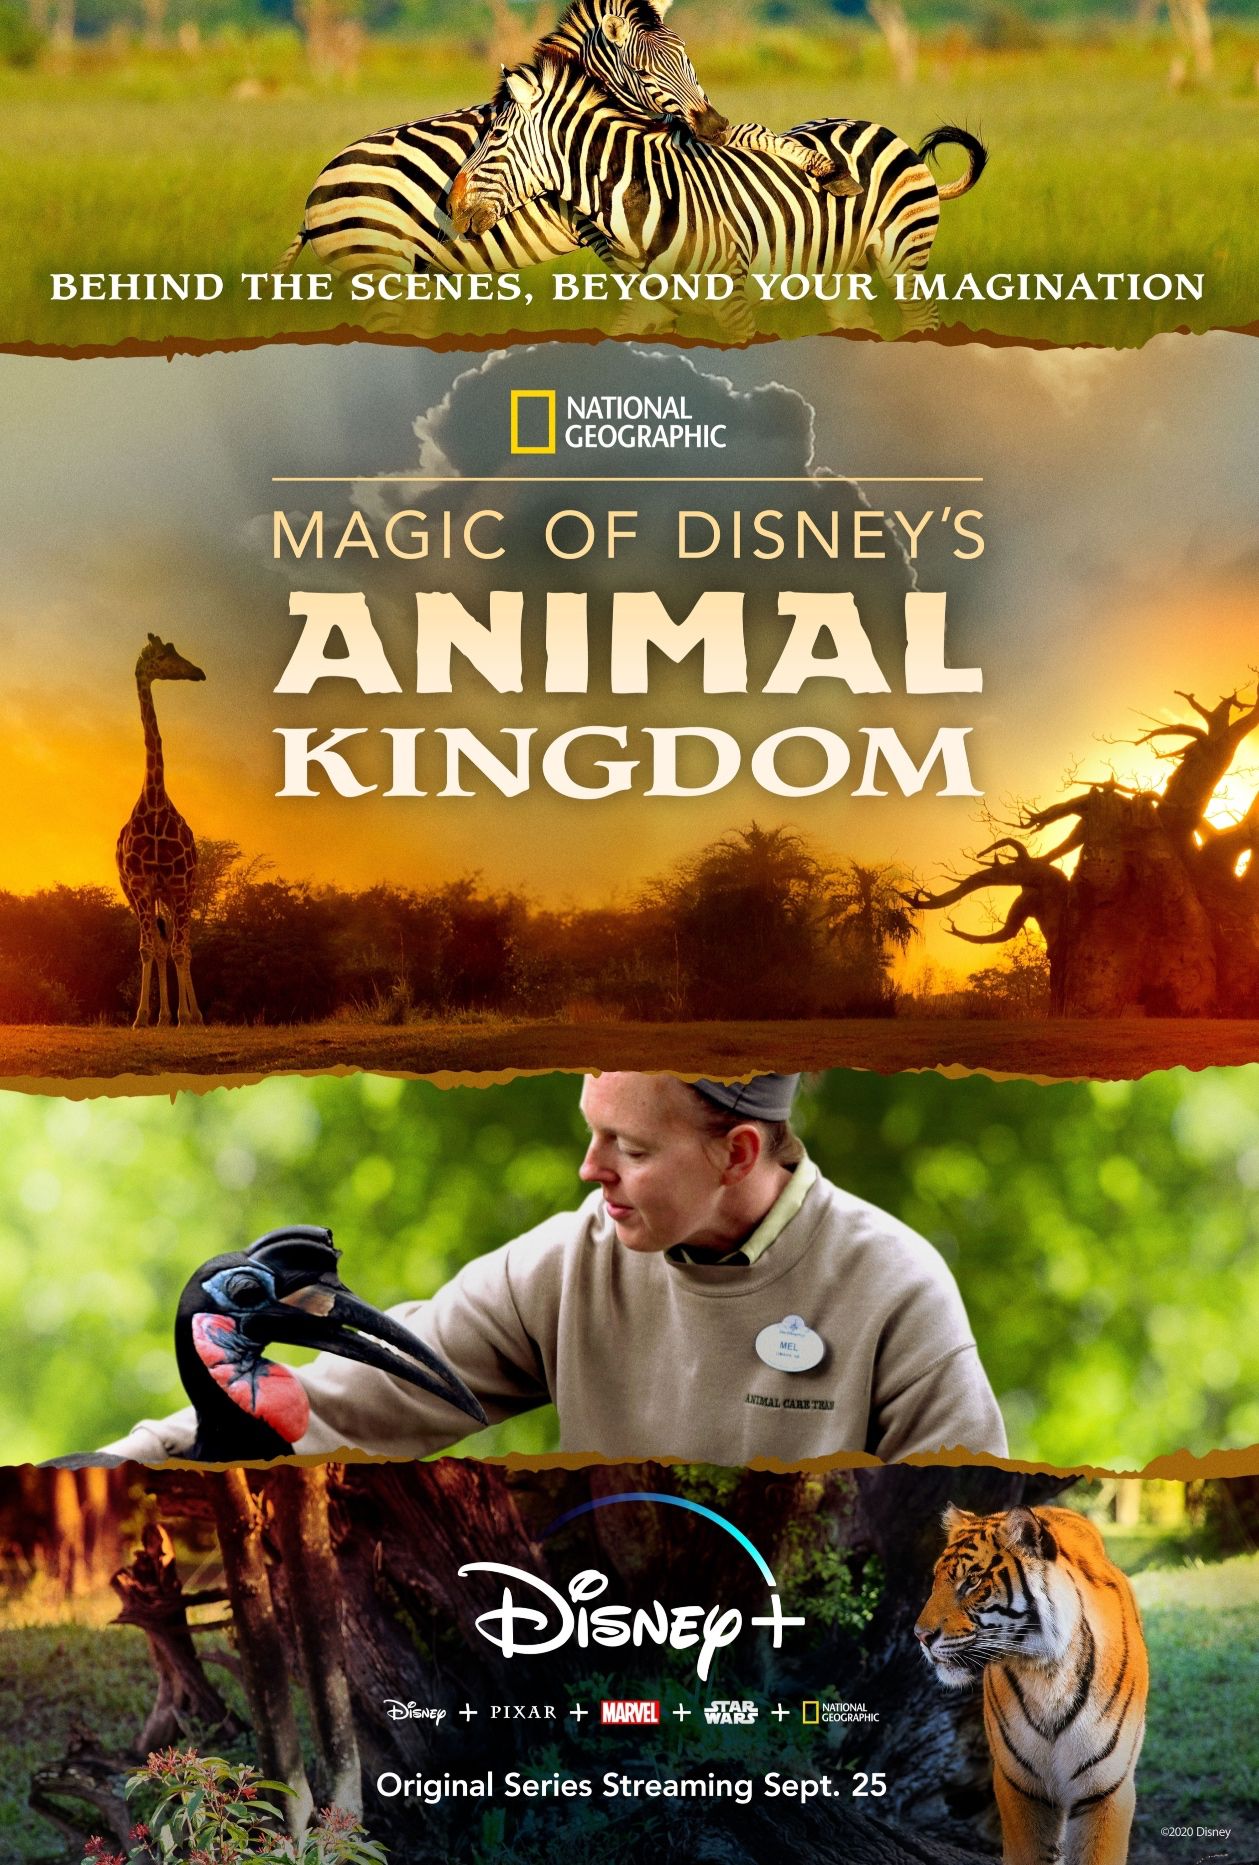 Magic of Disney's Animal Kingdom poster